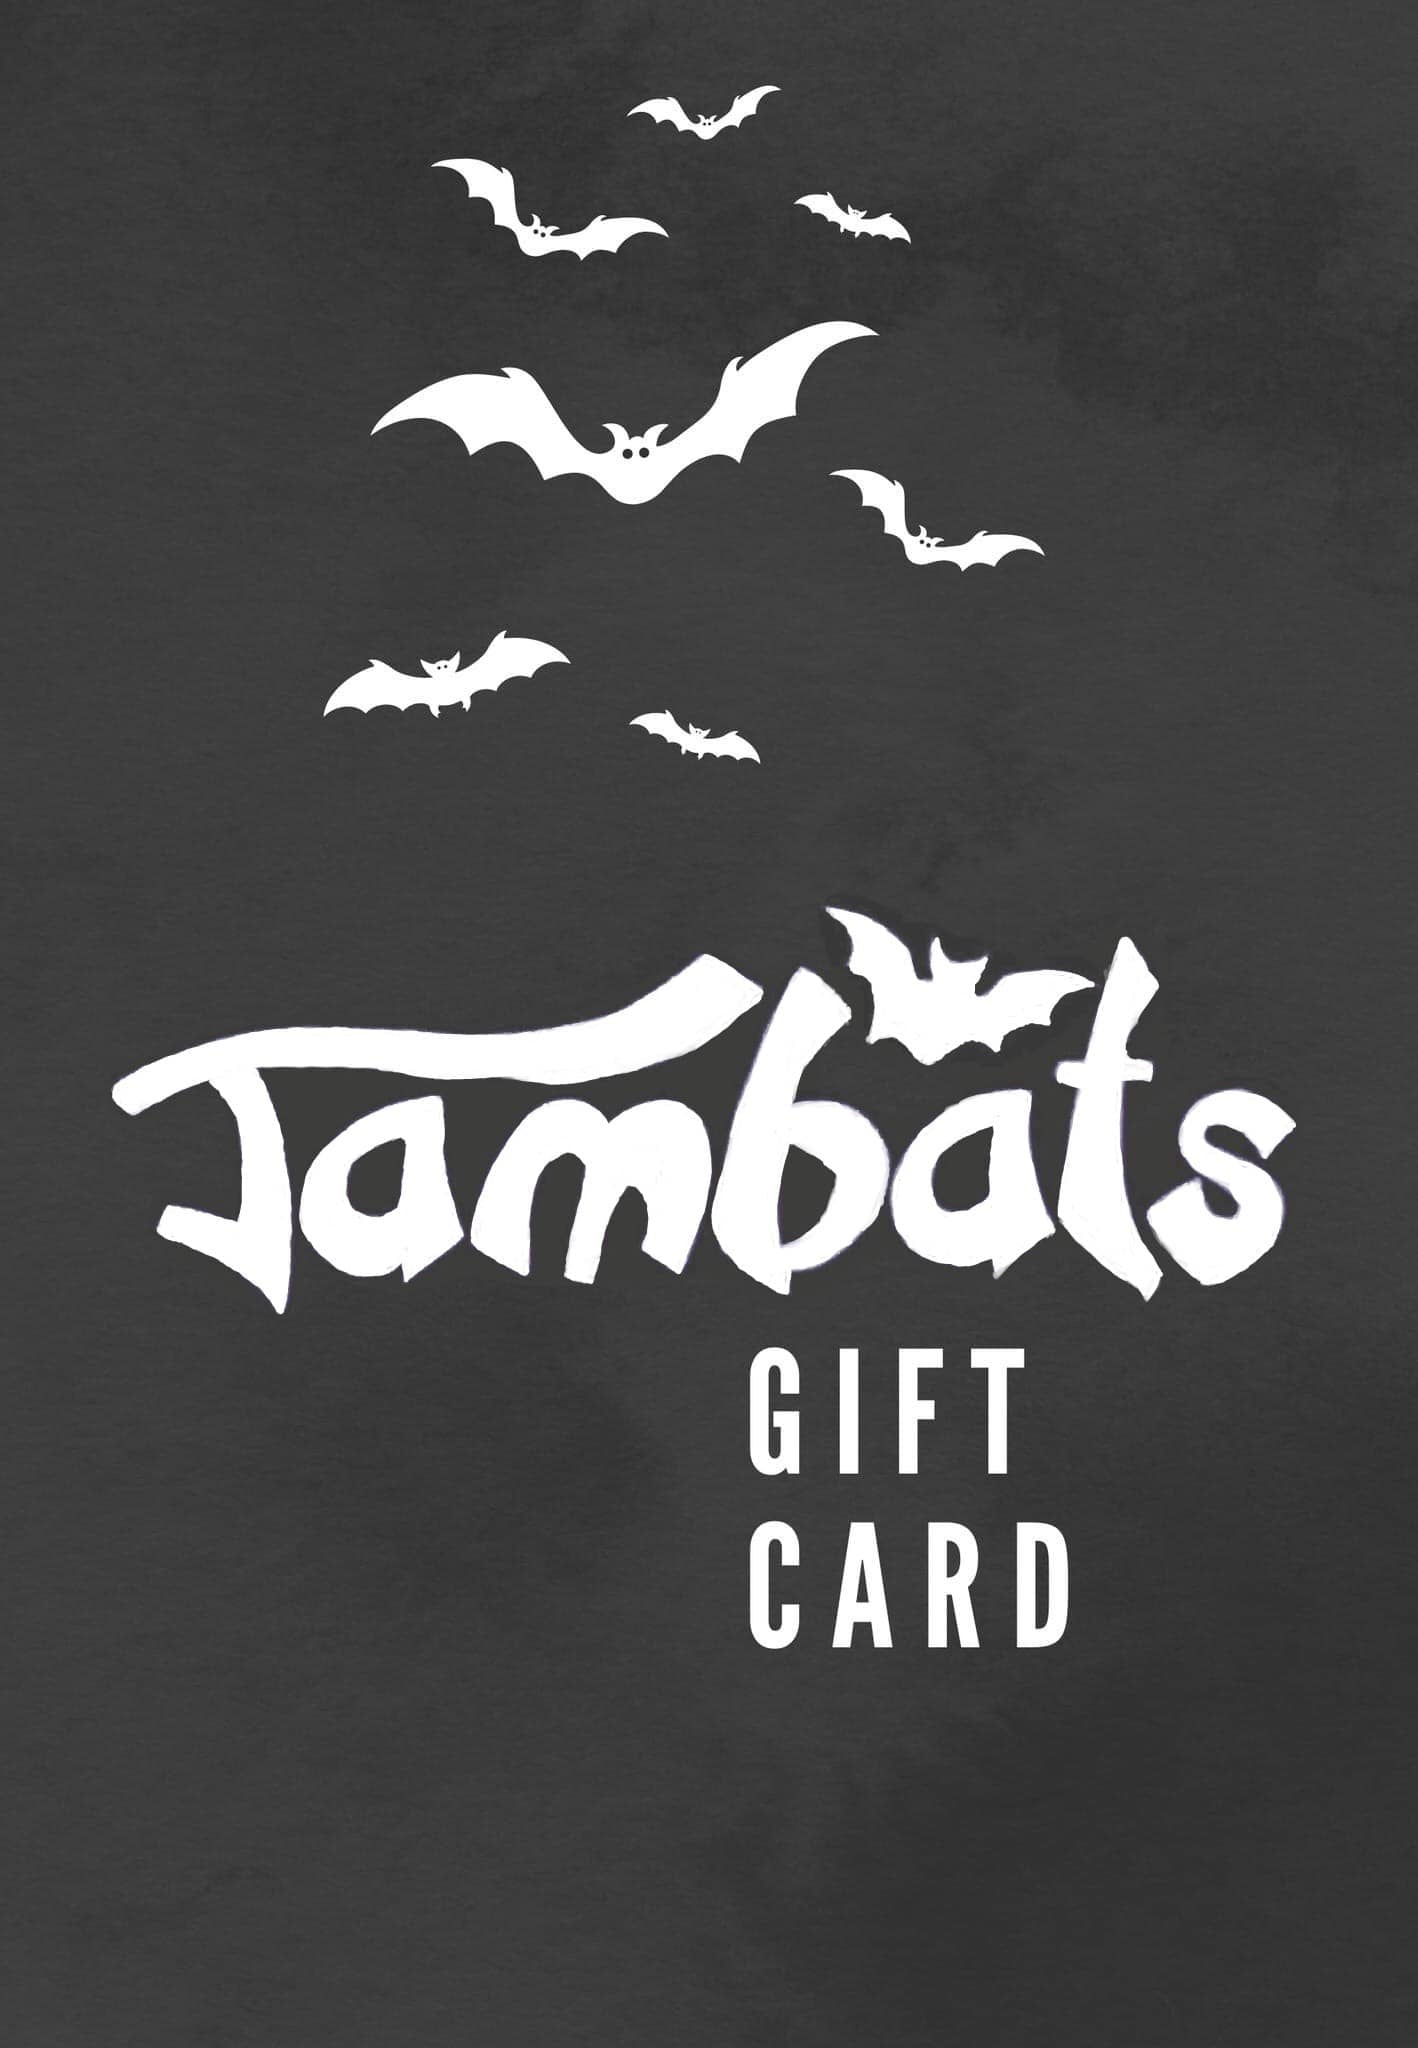 Jambats Gift Card